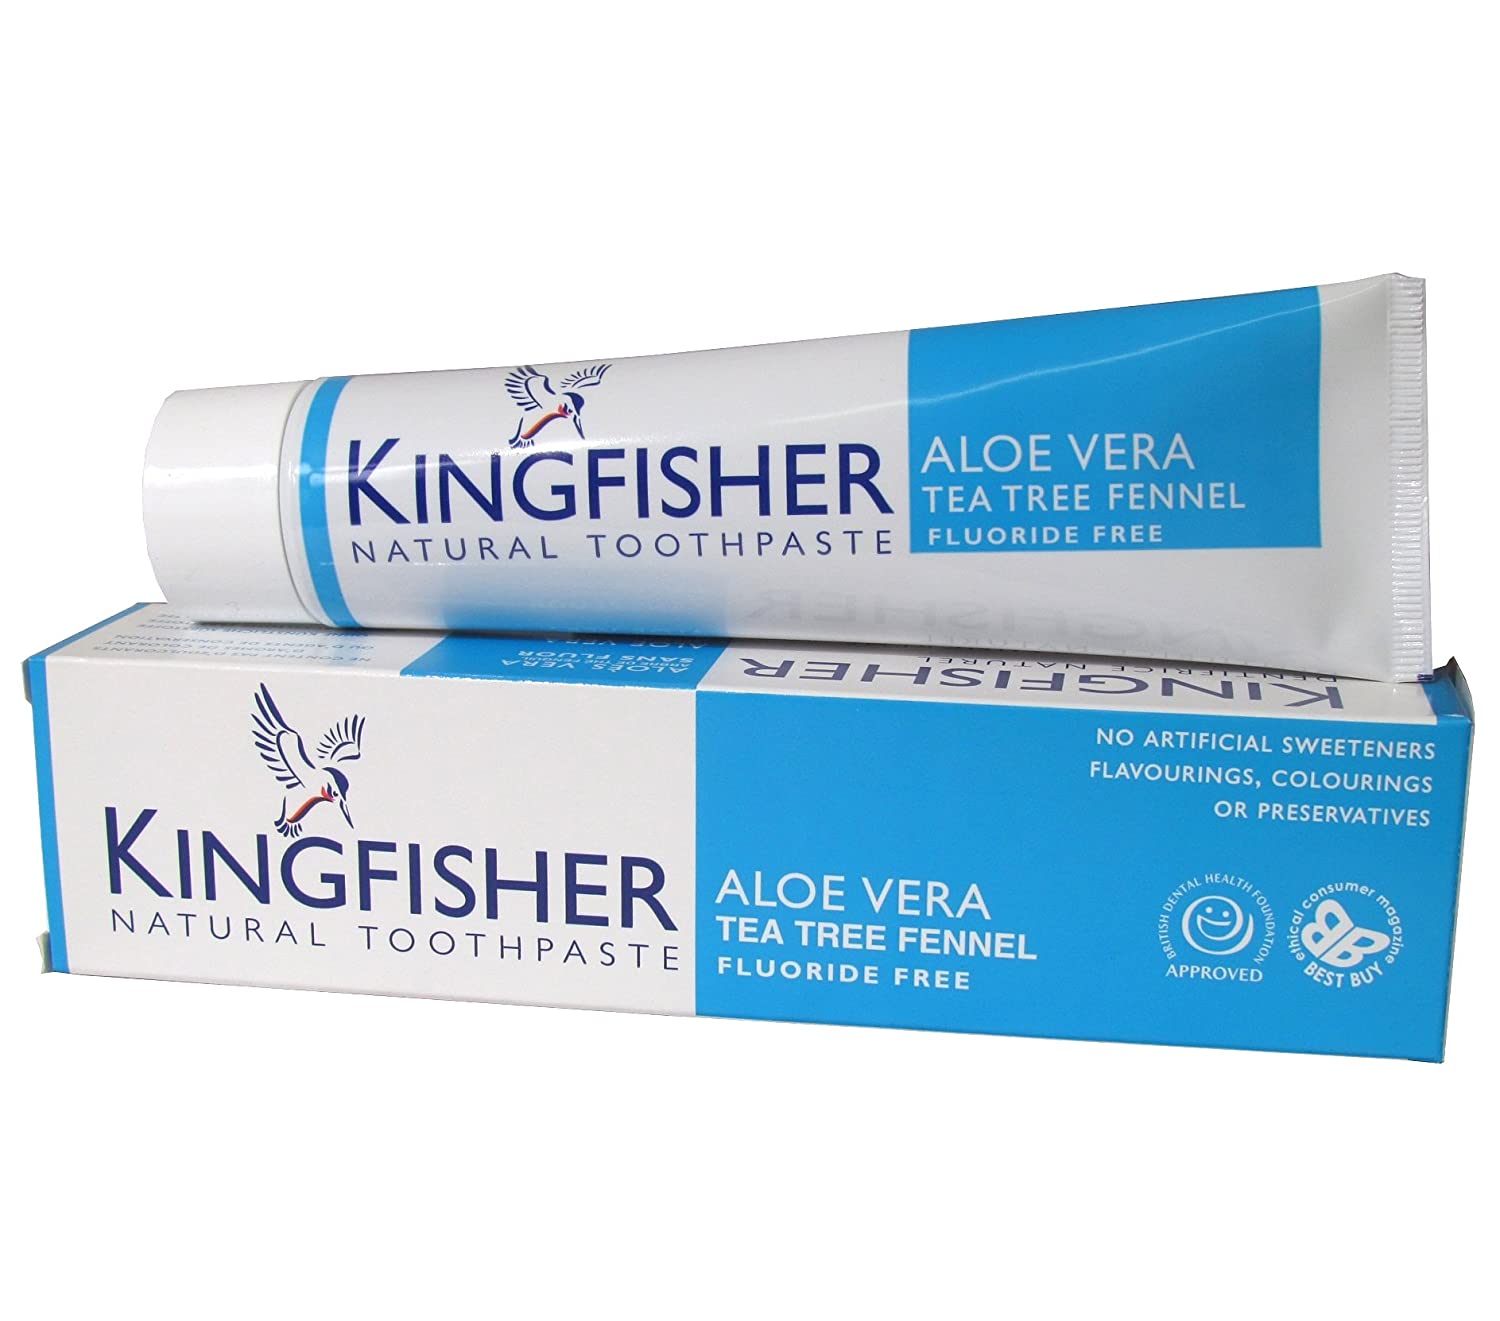 Kingfisher Toothpaste - Aloe Vera, Tea Tree & Fennel